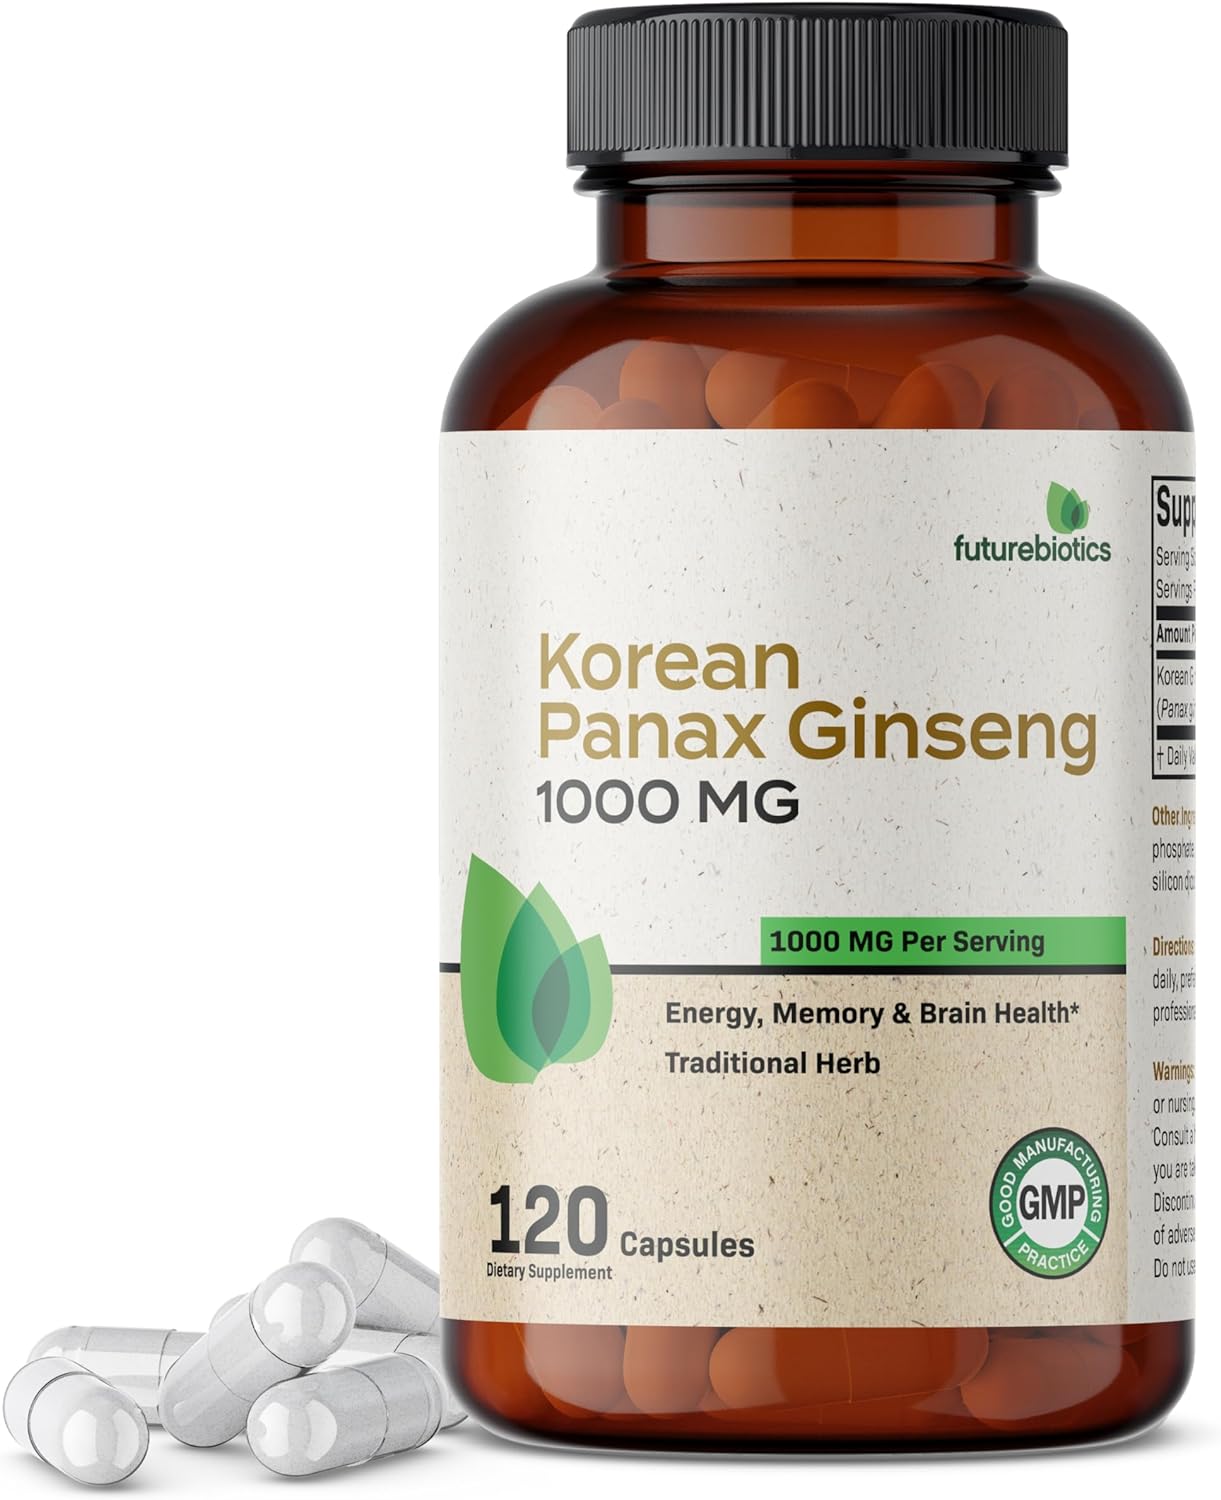 Futurebiotics Korean Panax Ginseng 1000 MG Per Serving Energy, Memory & Brain Health Support, No